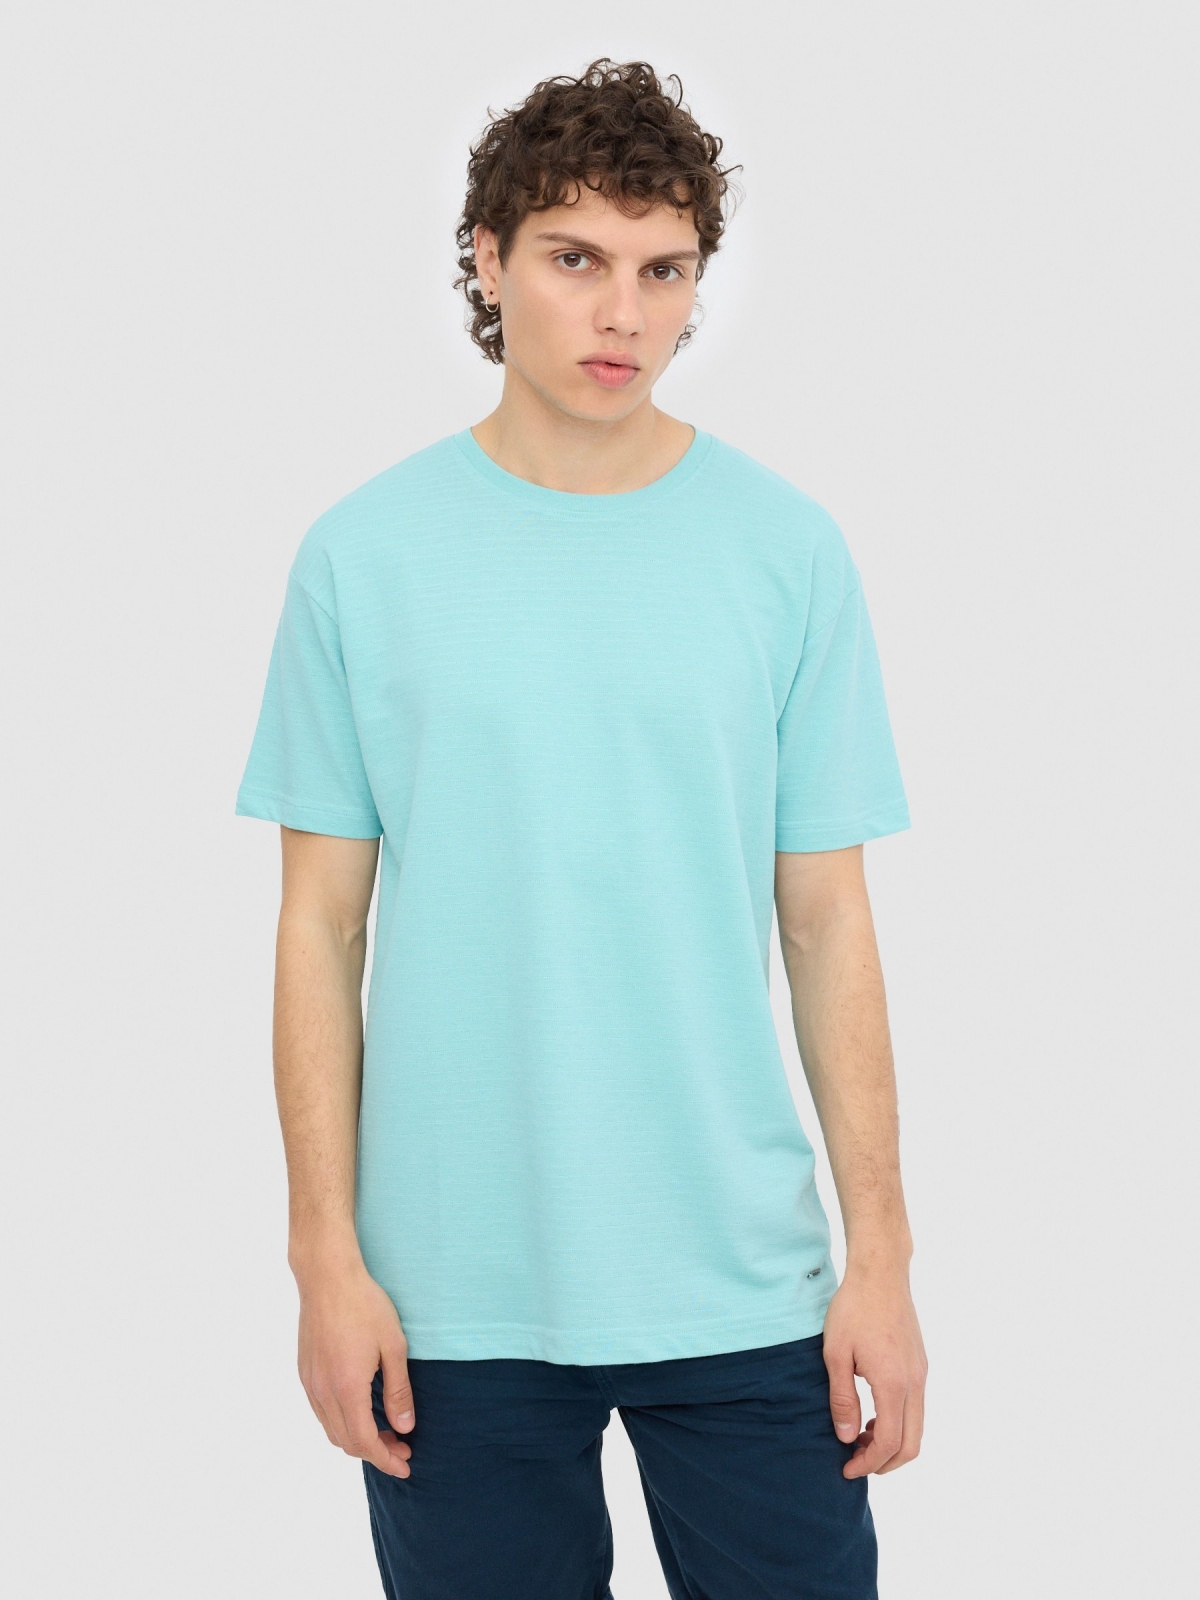 Camiseta rayas azul claro vista media frontal